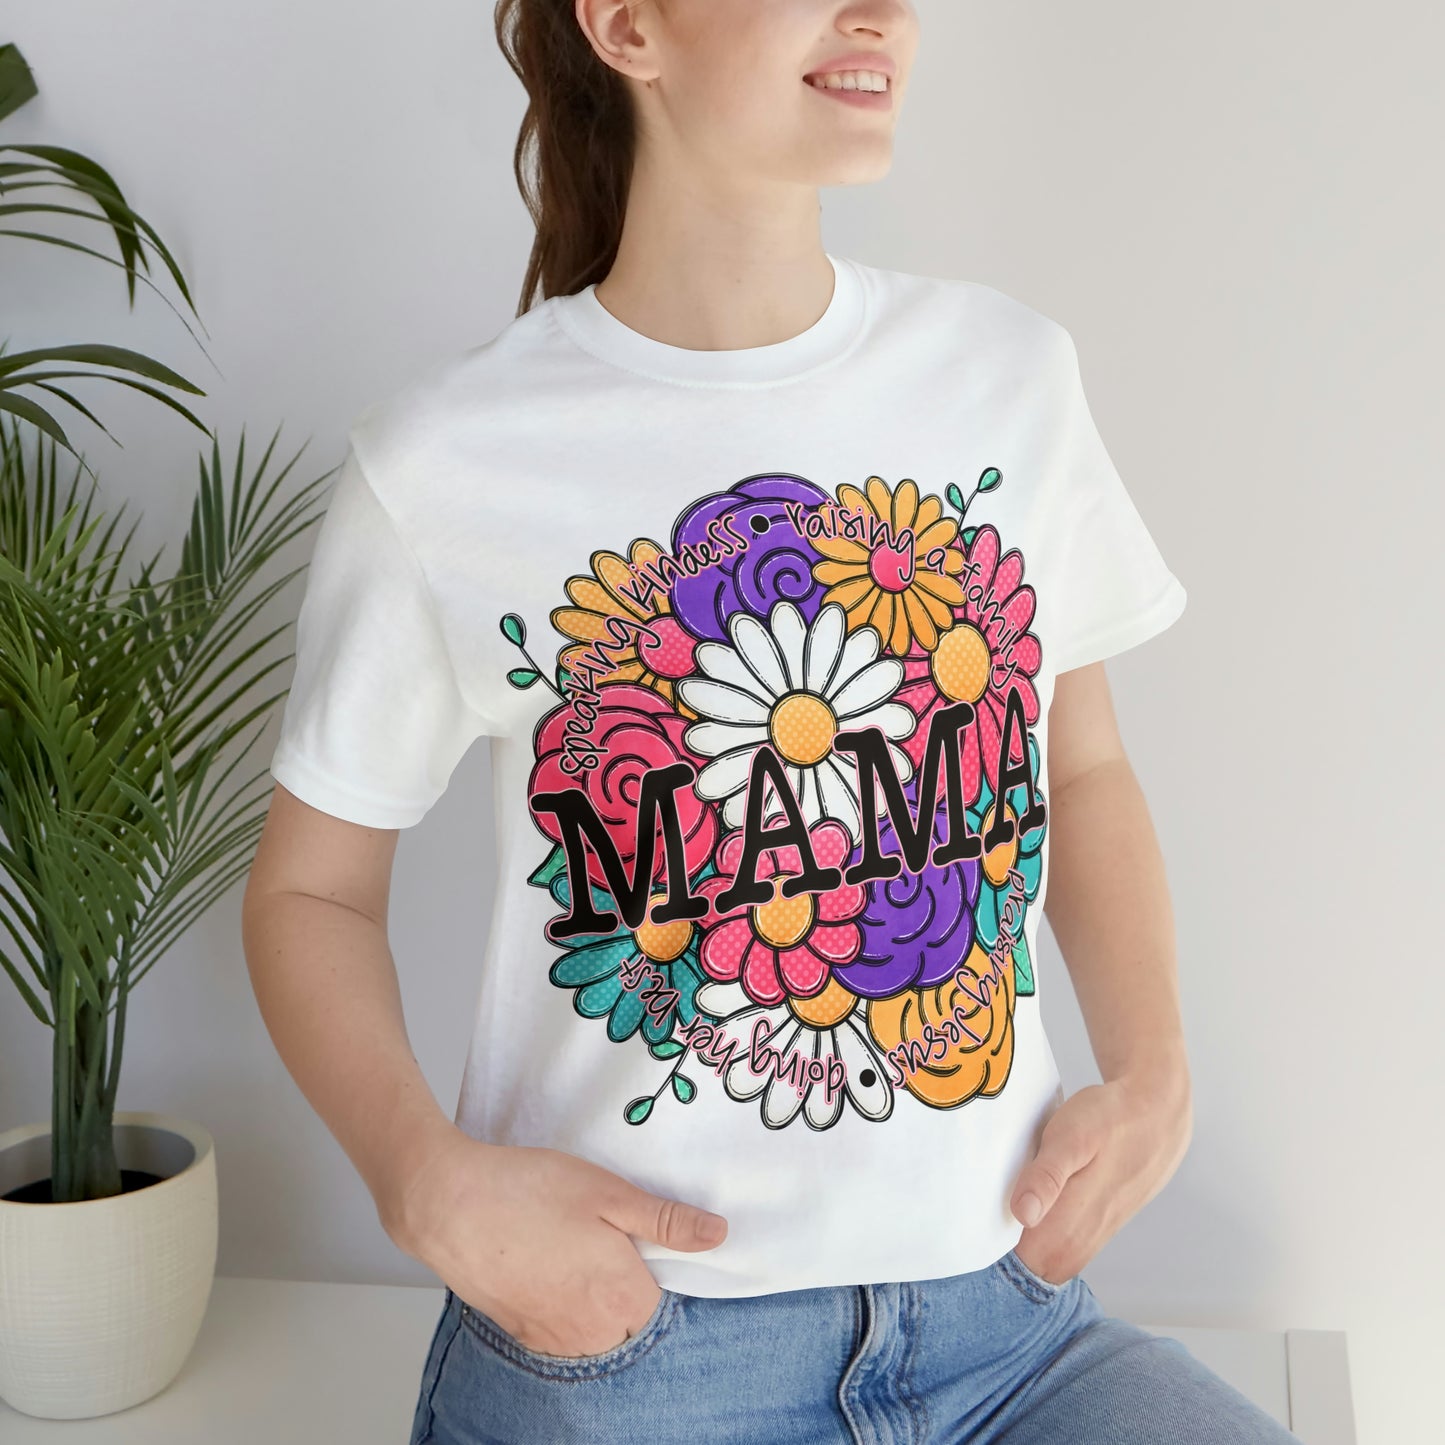 Mama Floral T-Shirt